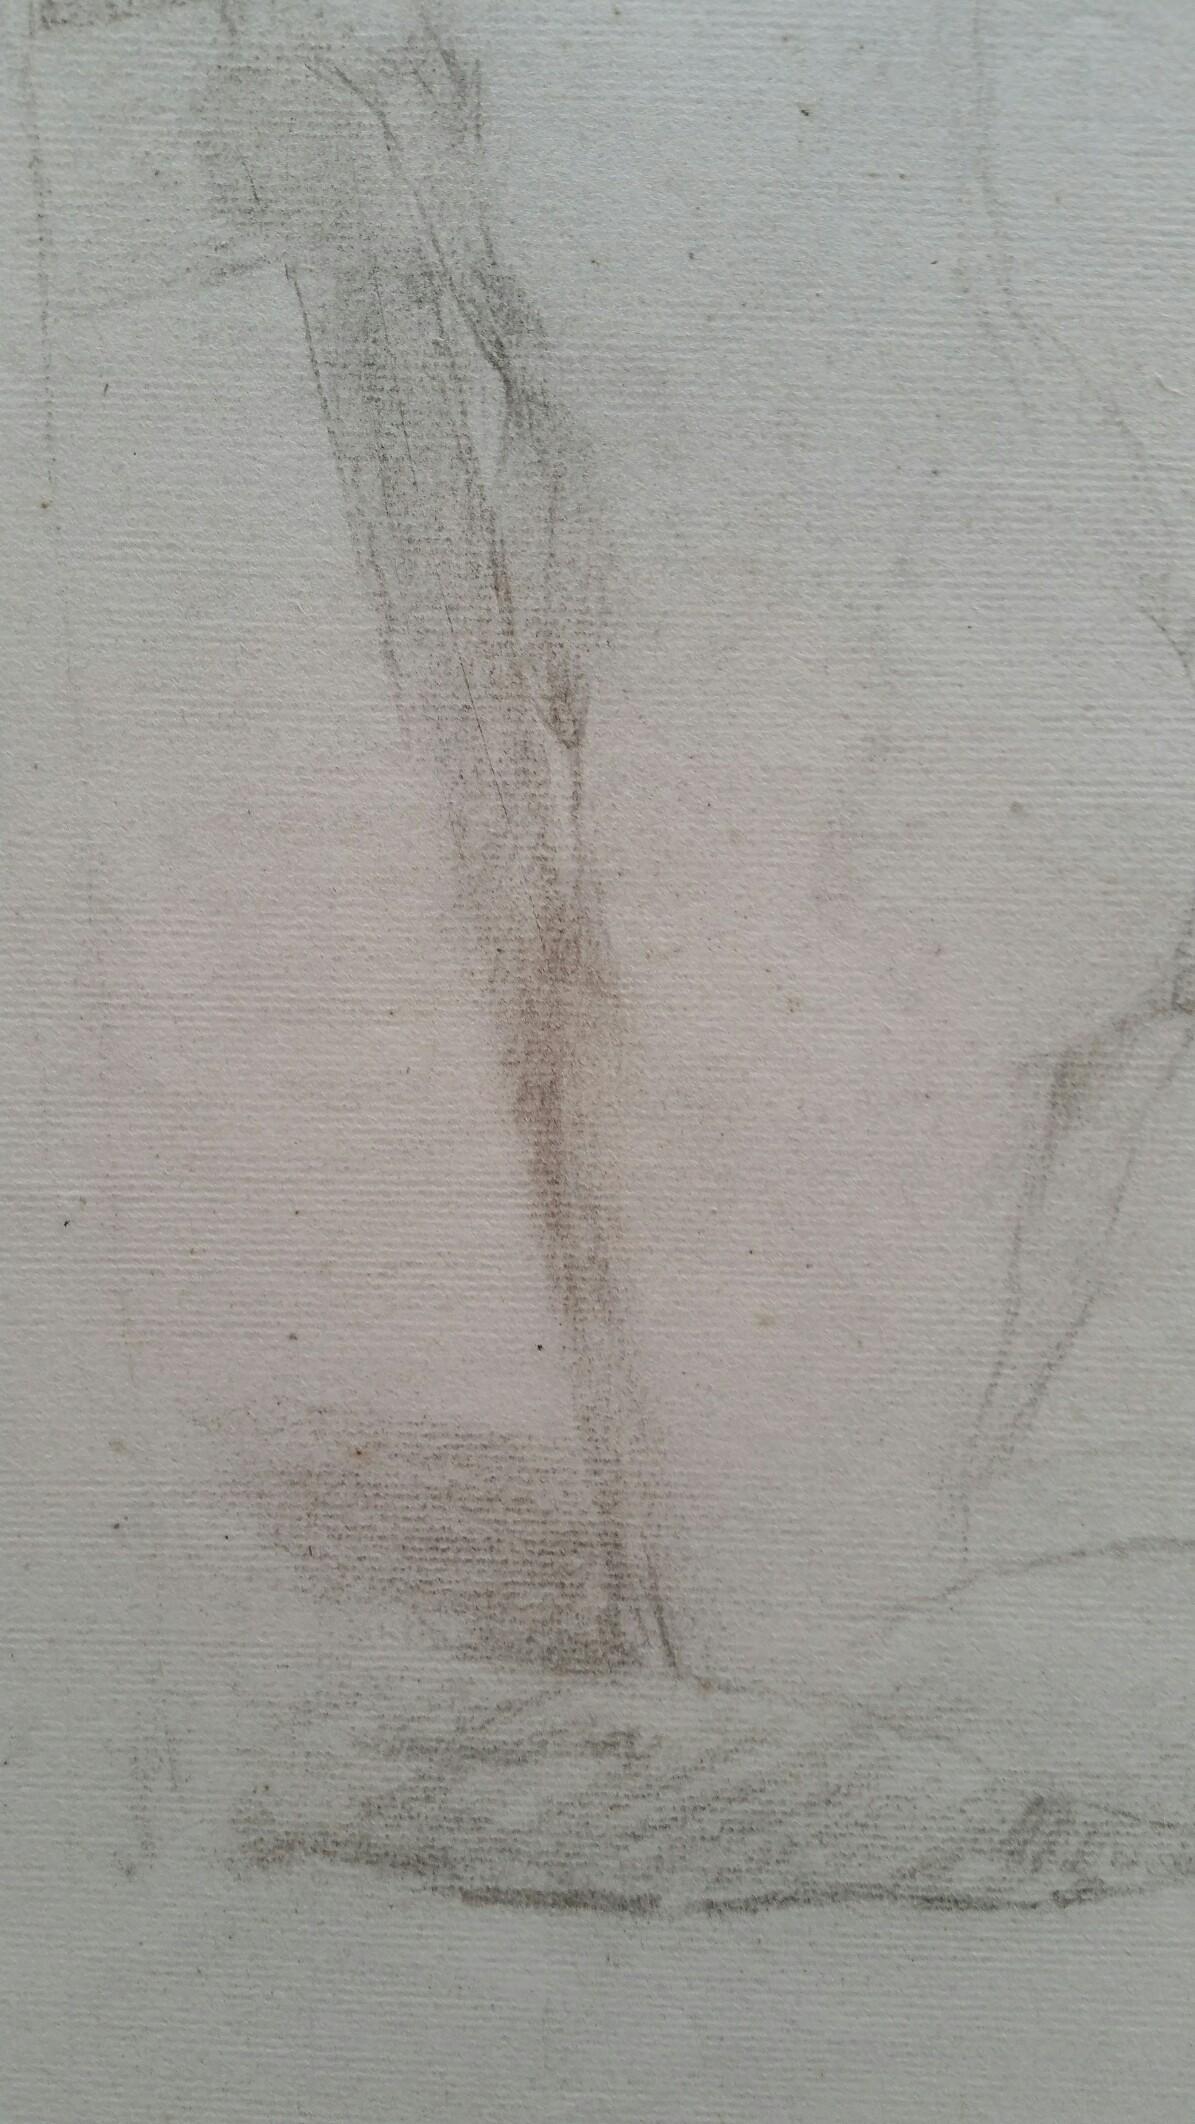 English Graphite Portrait Sketch of Female Nude, Kneeling For Sale 8